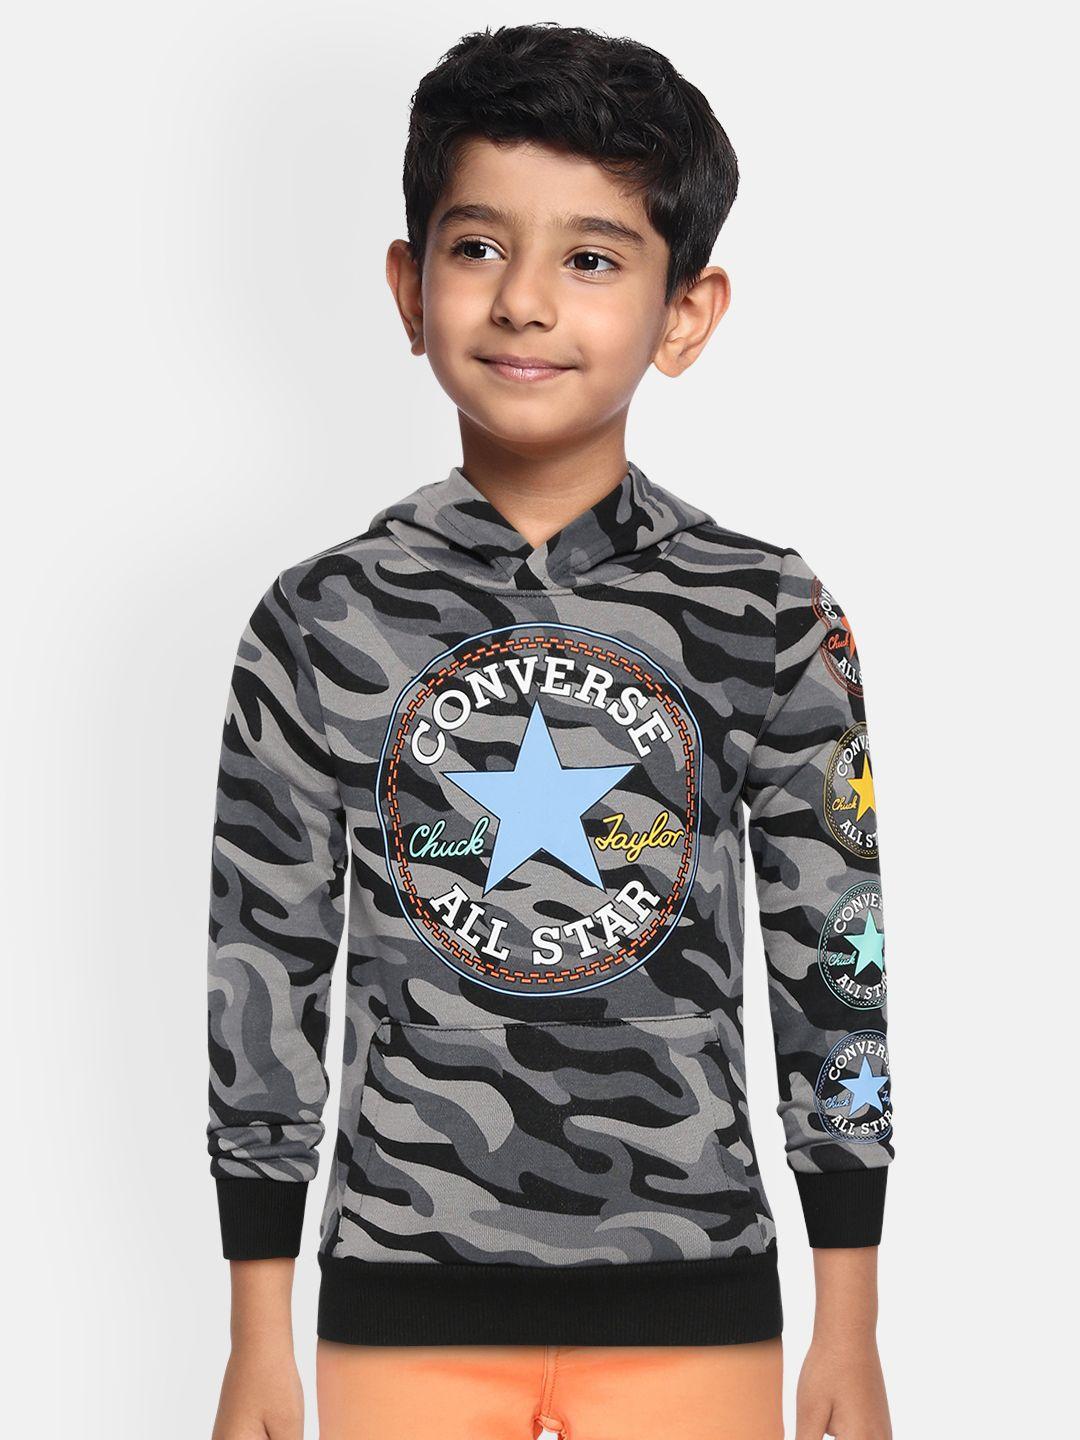 converse boys grey & black camouflage print hooded sweatshirt